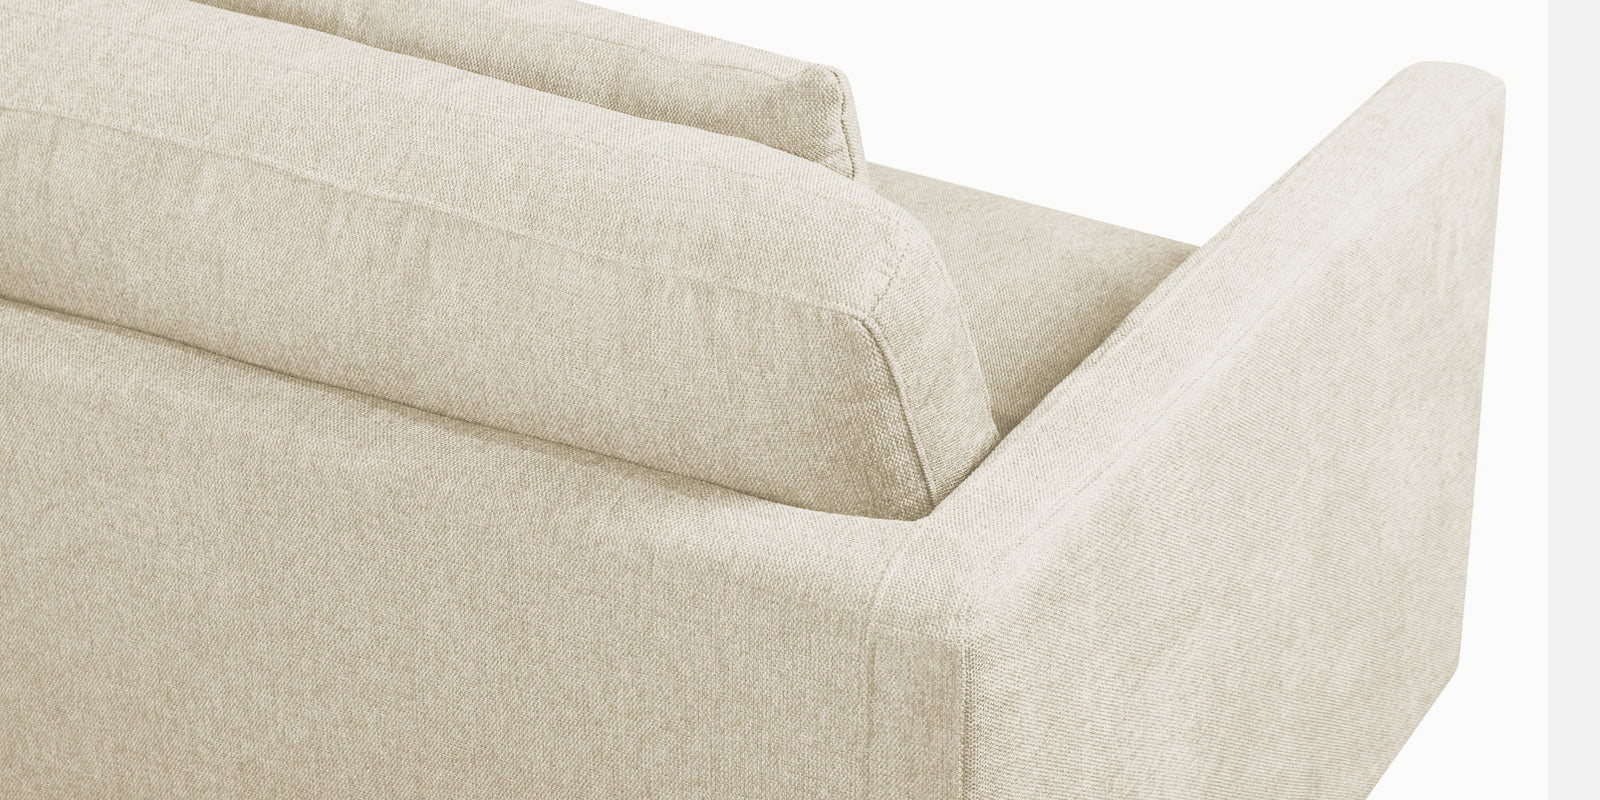 Kera Fabric 2 Seater Sofa in Ivory Cream Colour